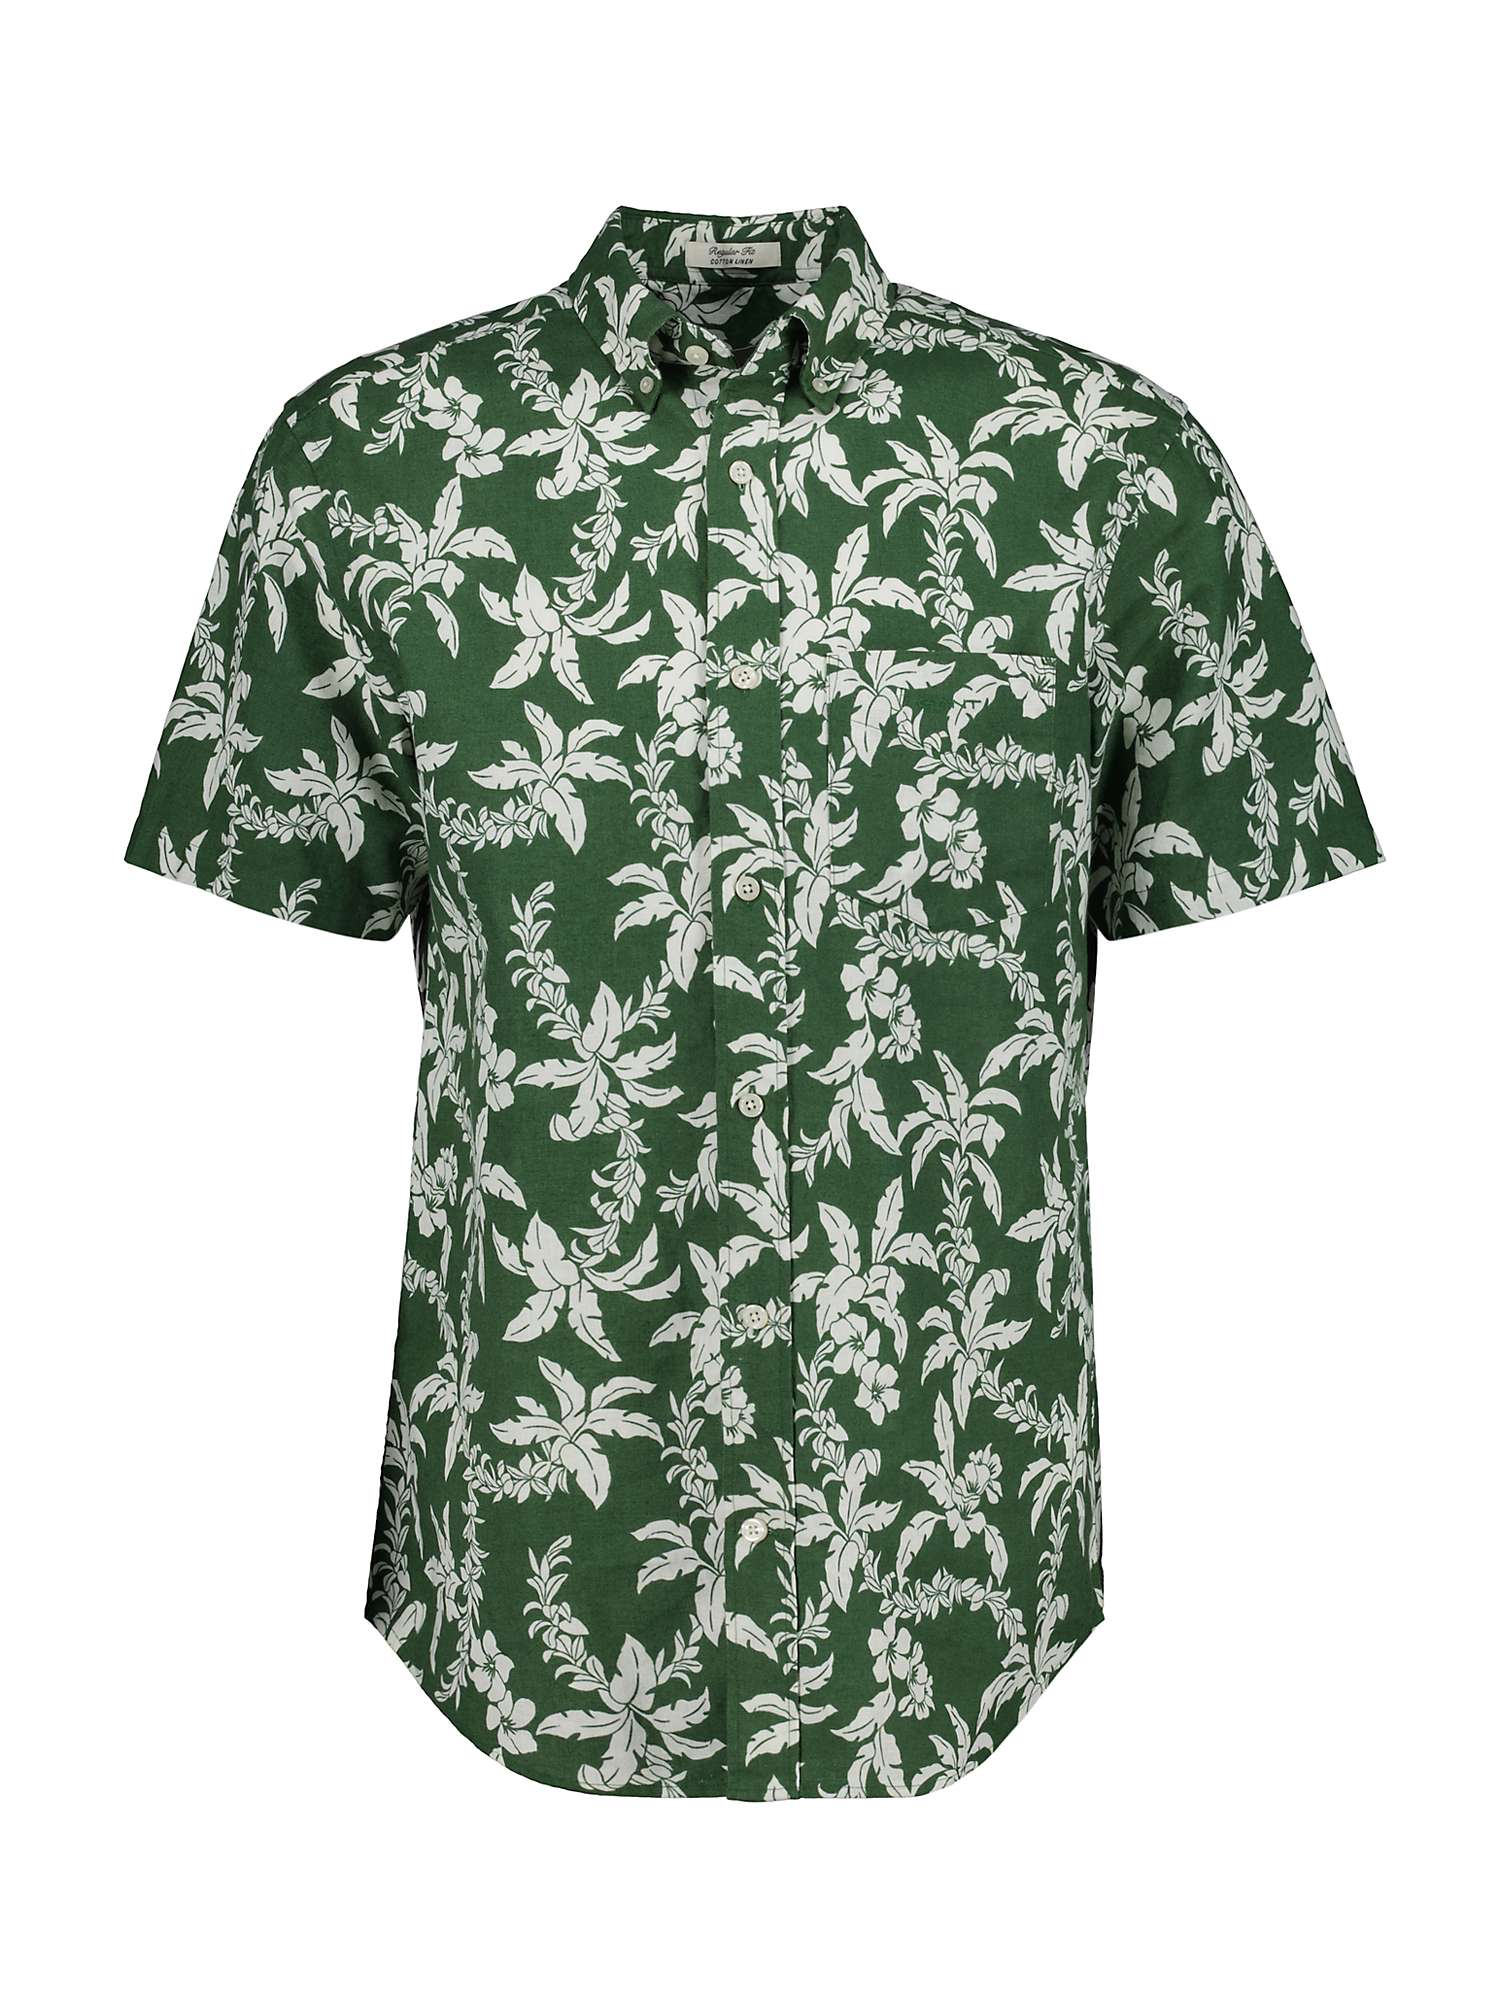 Buy GANT All Over Palm Print Short Sleeve Shirt, Green/Multi Online at johnlewis.com